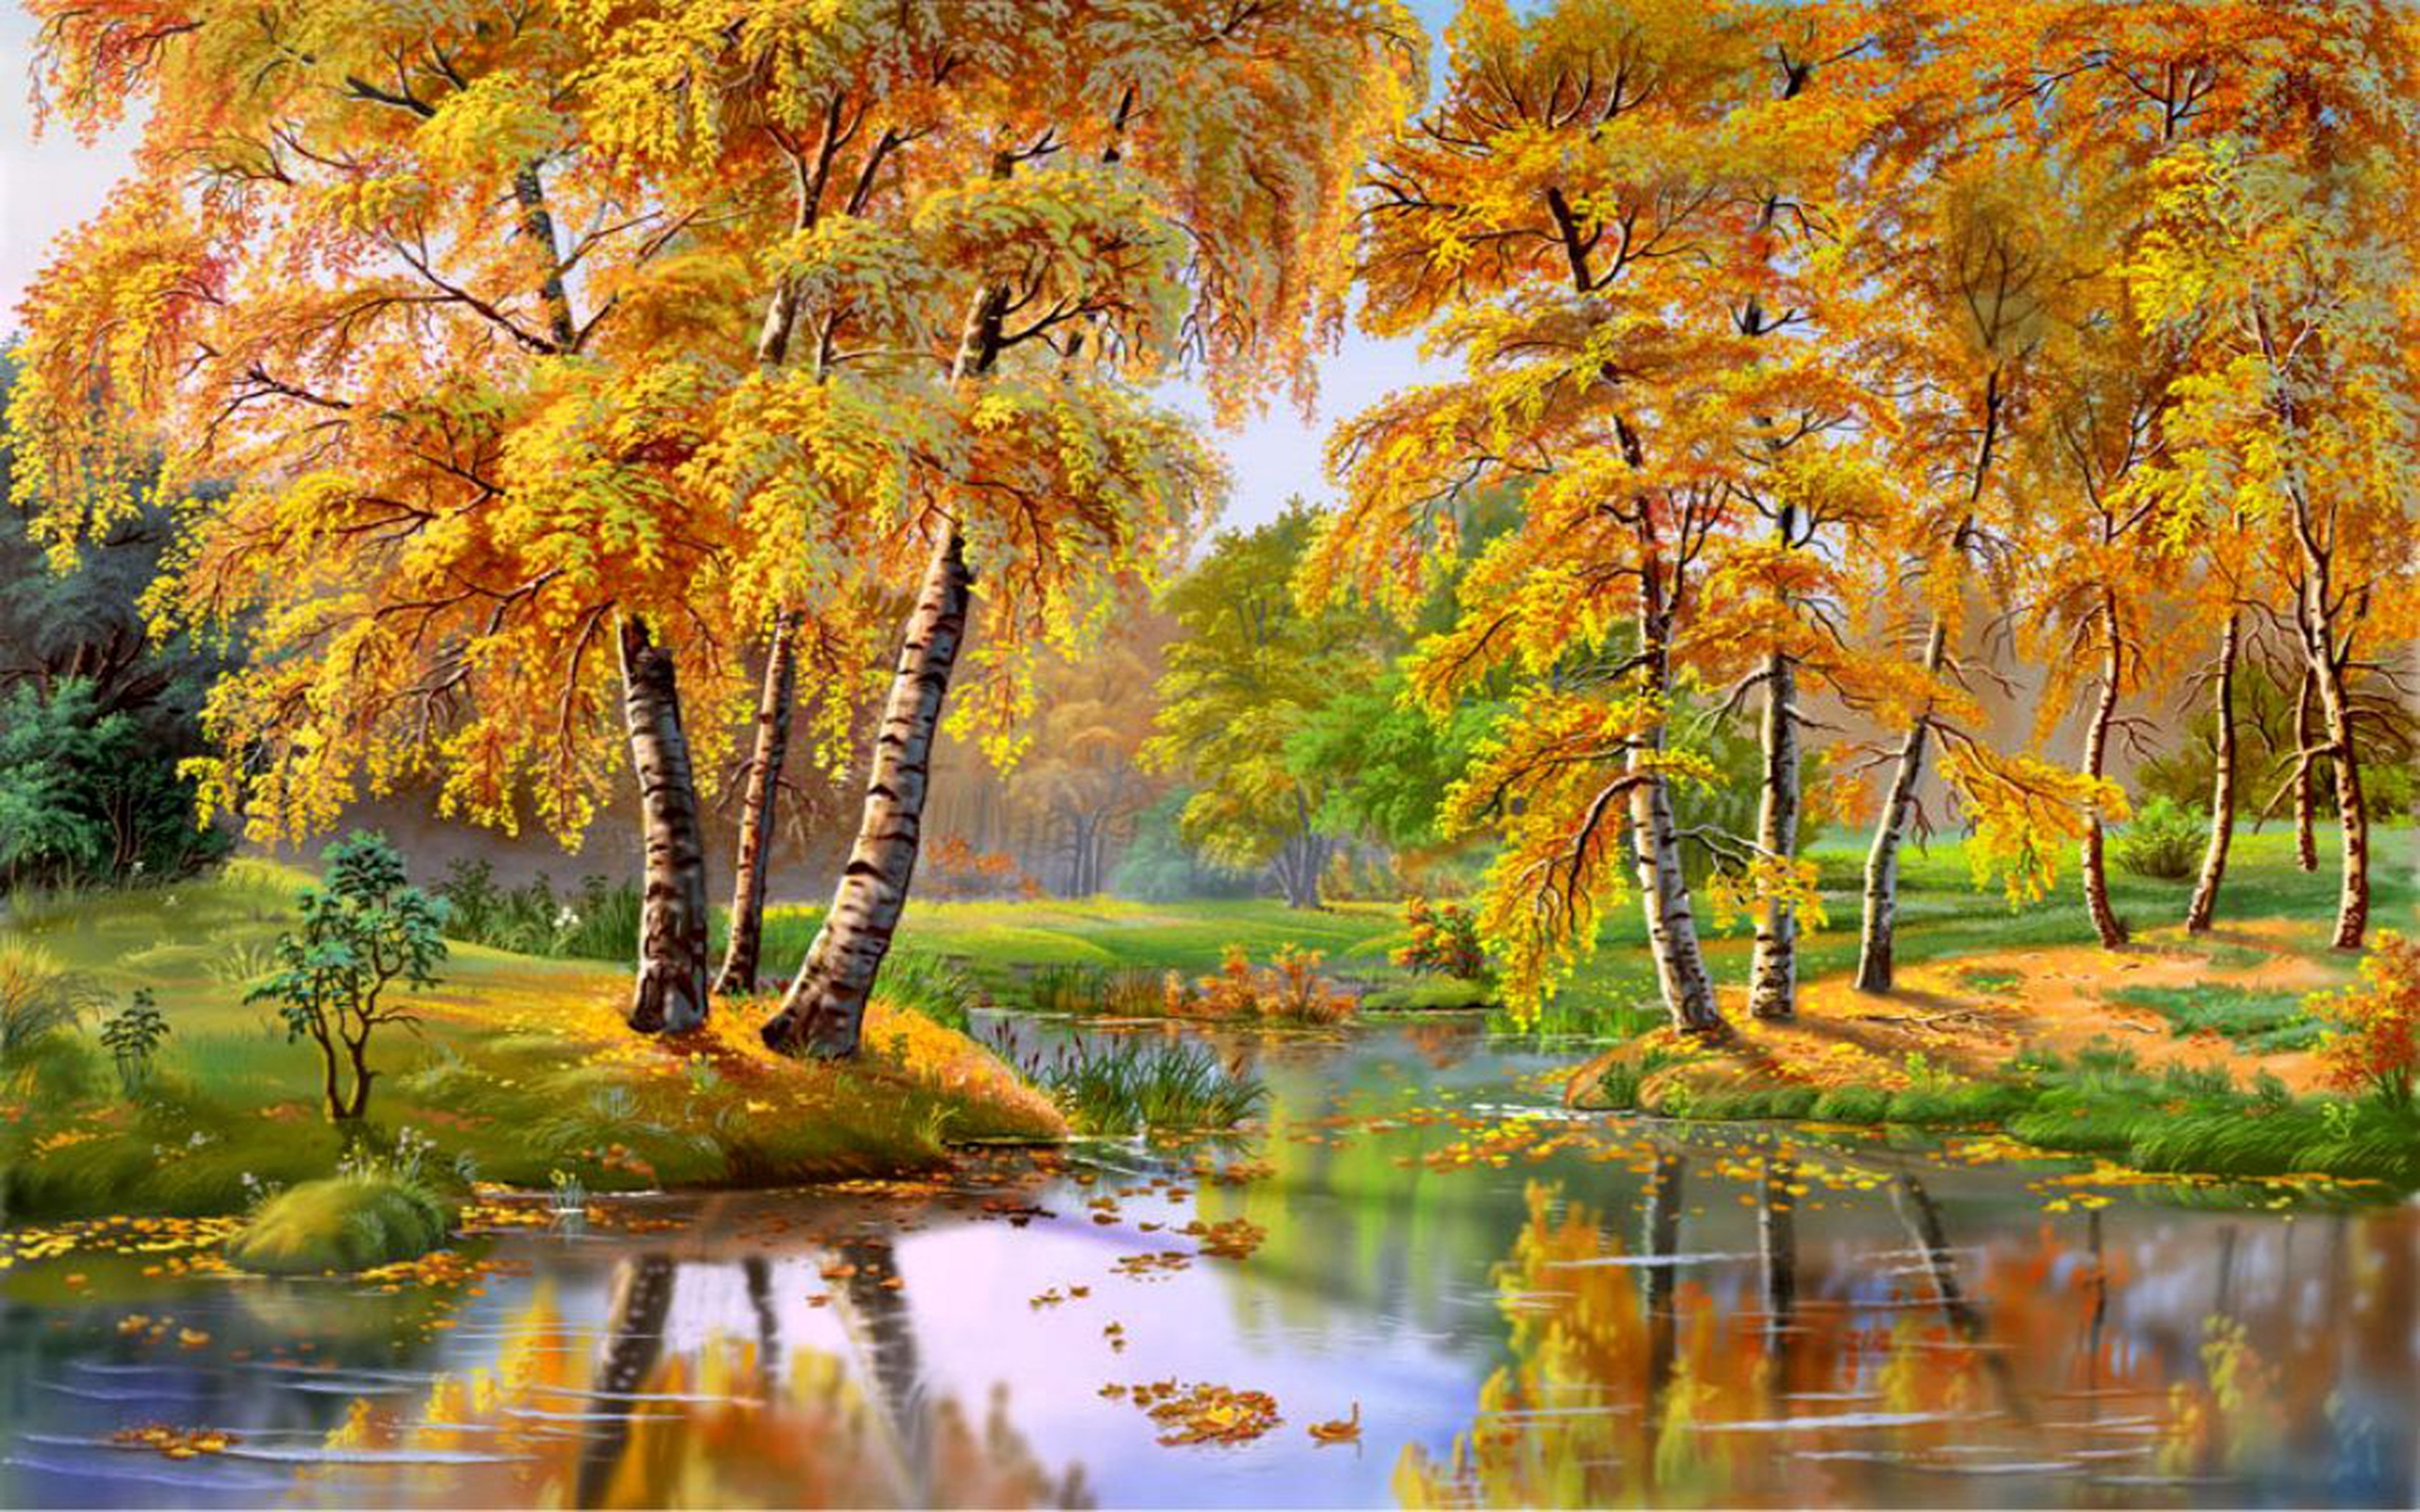 Wonderful Autumn Landscape, River, Trees 087537 : Wallpapers13.com